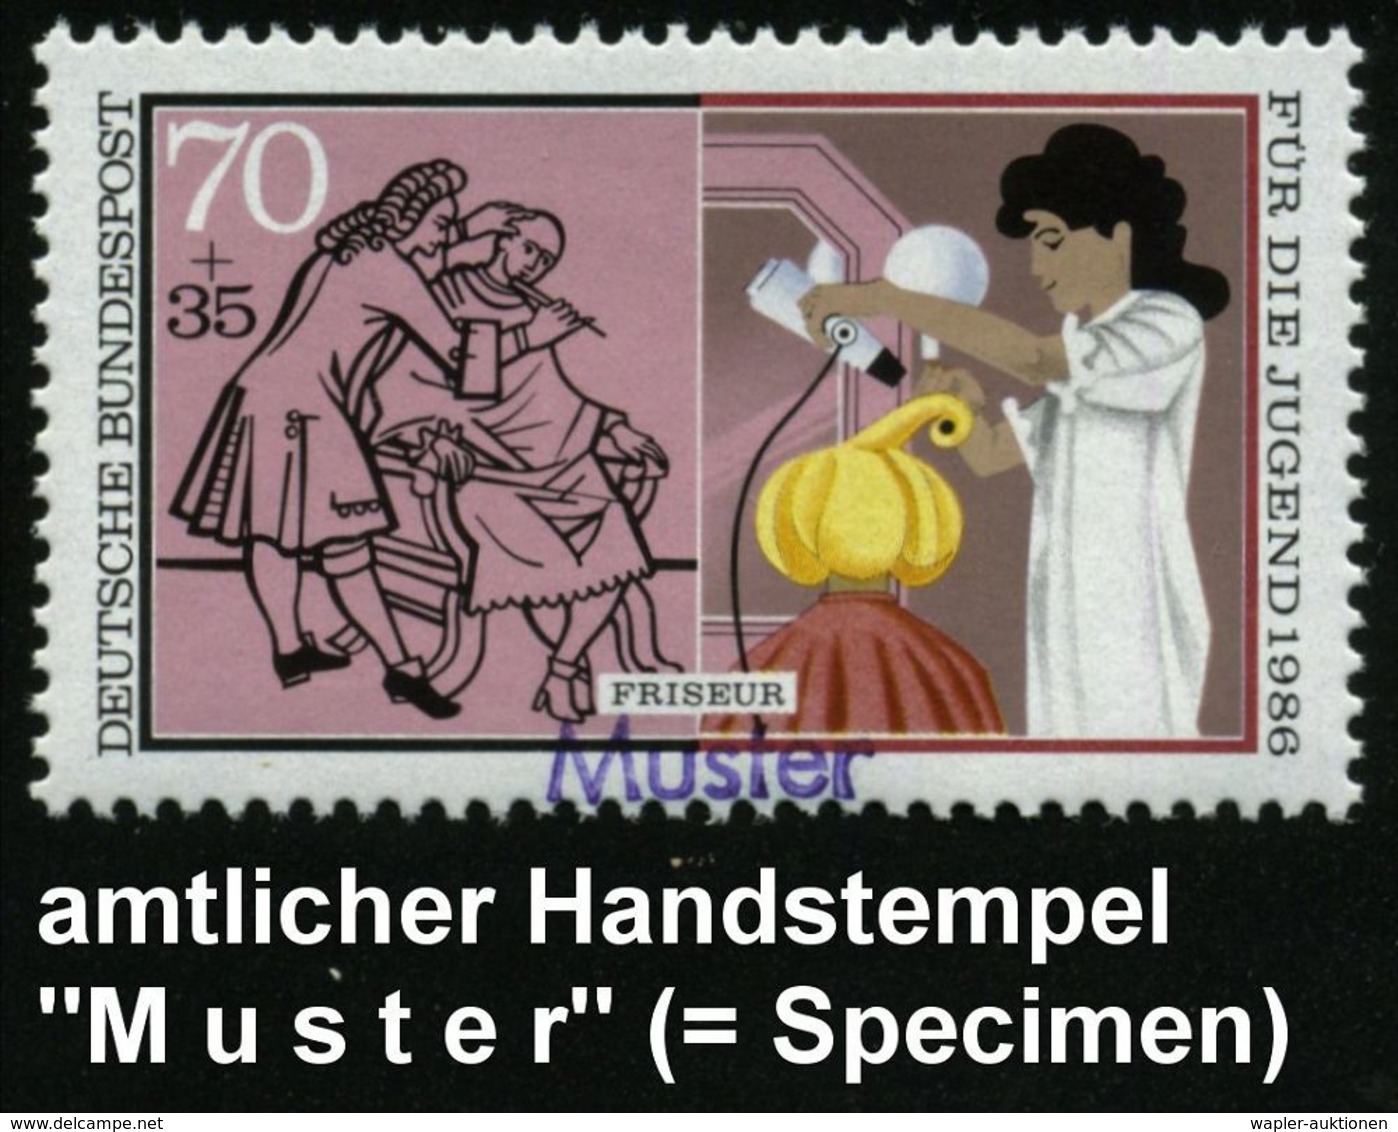 HAAR / BART / RASUR / FRISEUR : B.R.D. 1986 (Apr.) 70 Pf.+ 35 Pf. Jugendmarke "Friseur-Handwerk" Mit Amtl. Handstempel   - Pharmacie